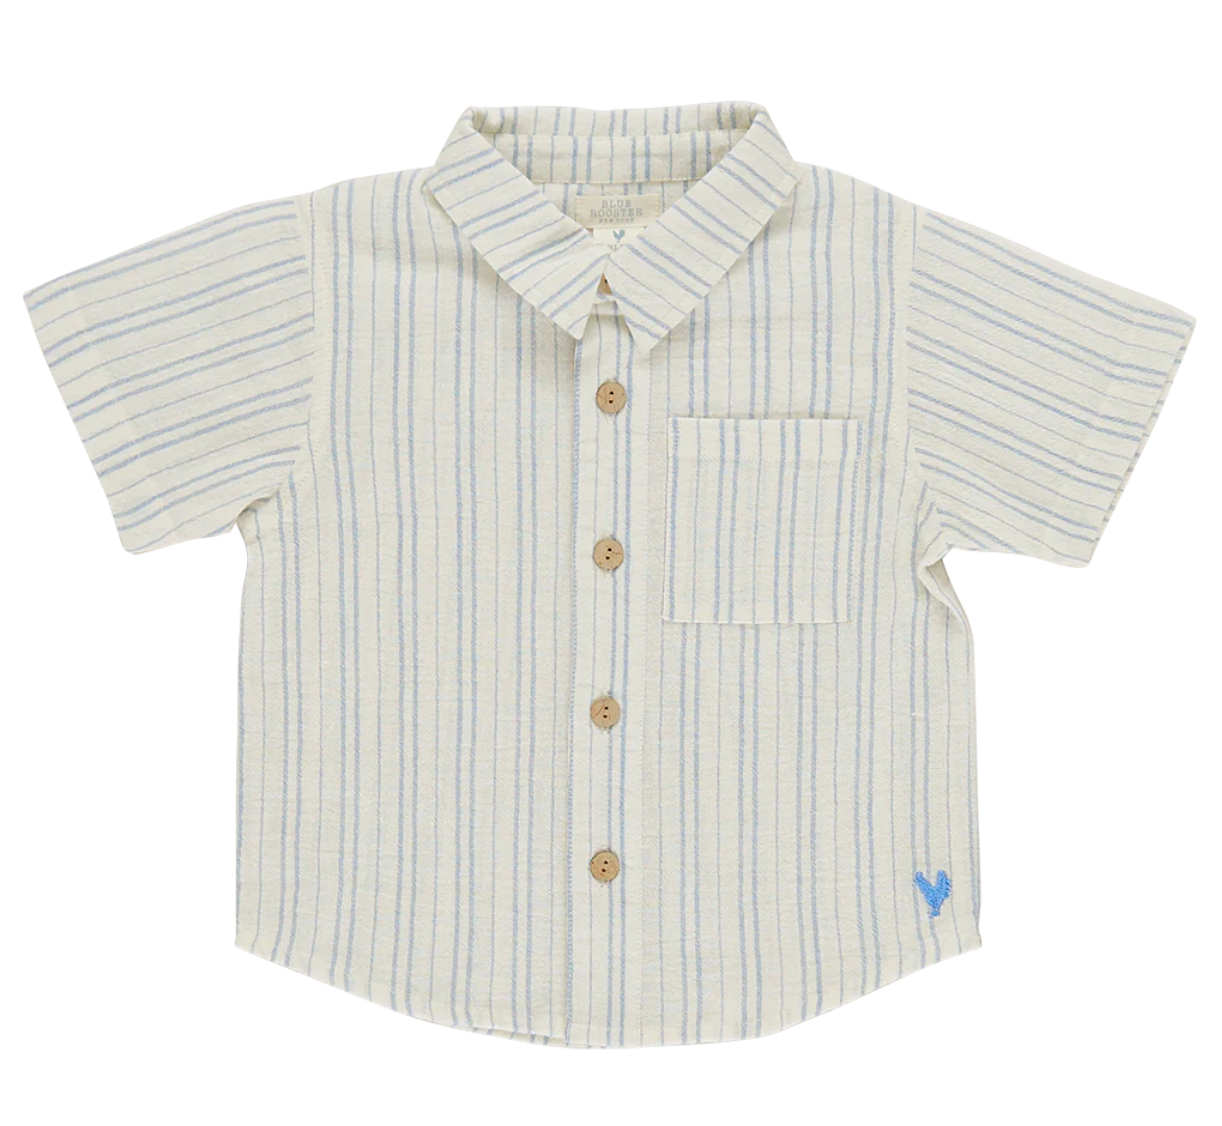 Boys Jack Shirt - Riviera Stripe